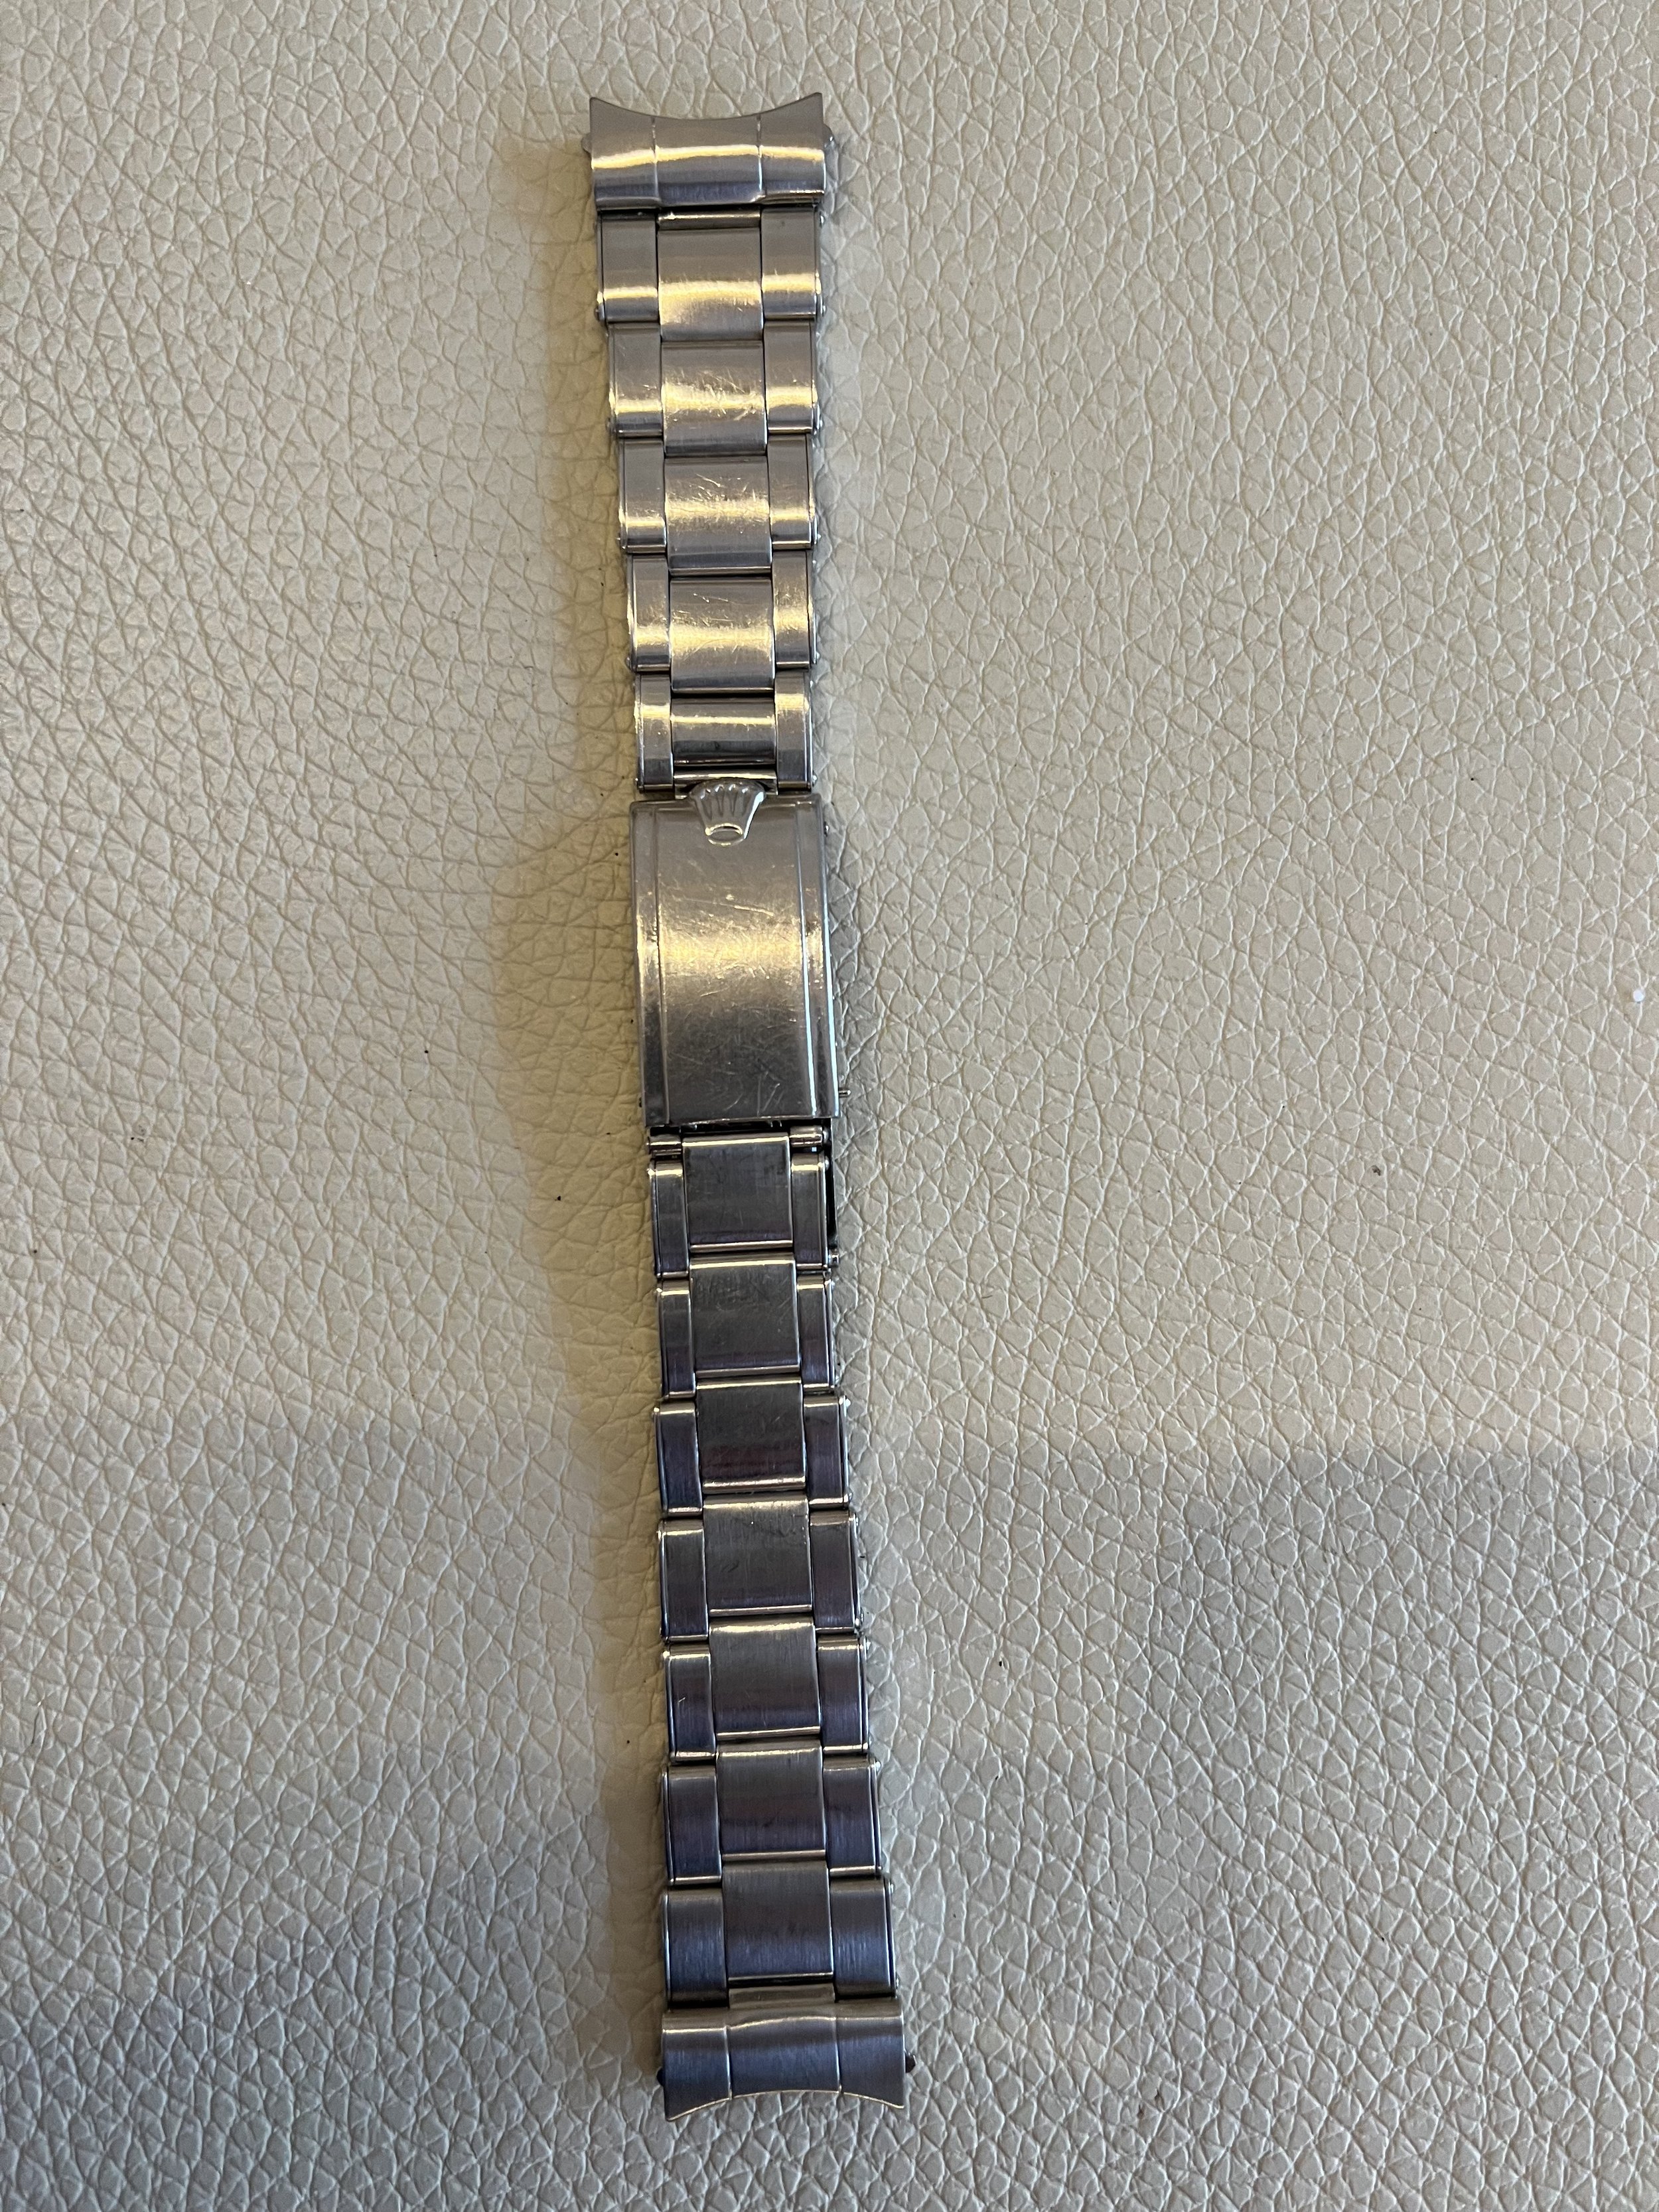 Rolex “Big Logo” bracelet with 65 end links from 1959